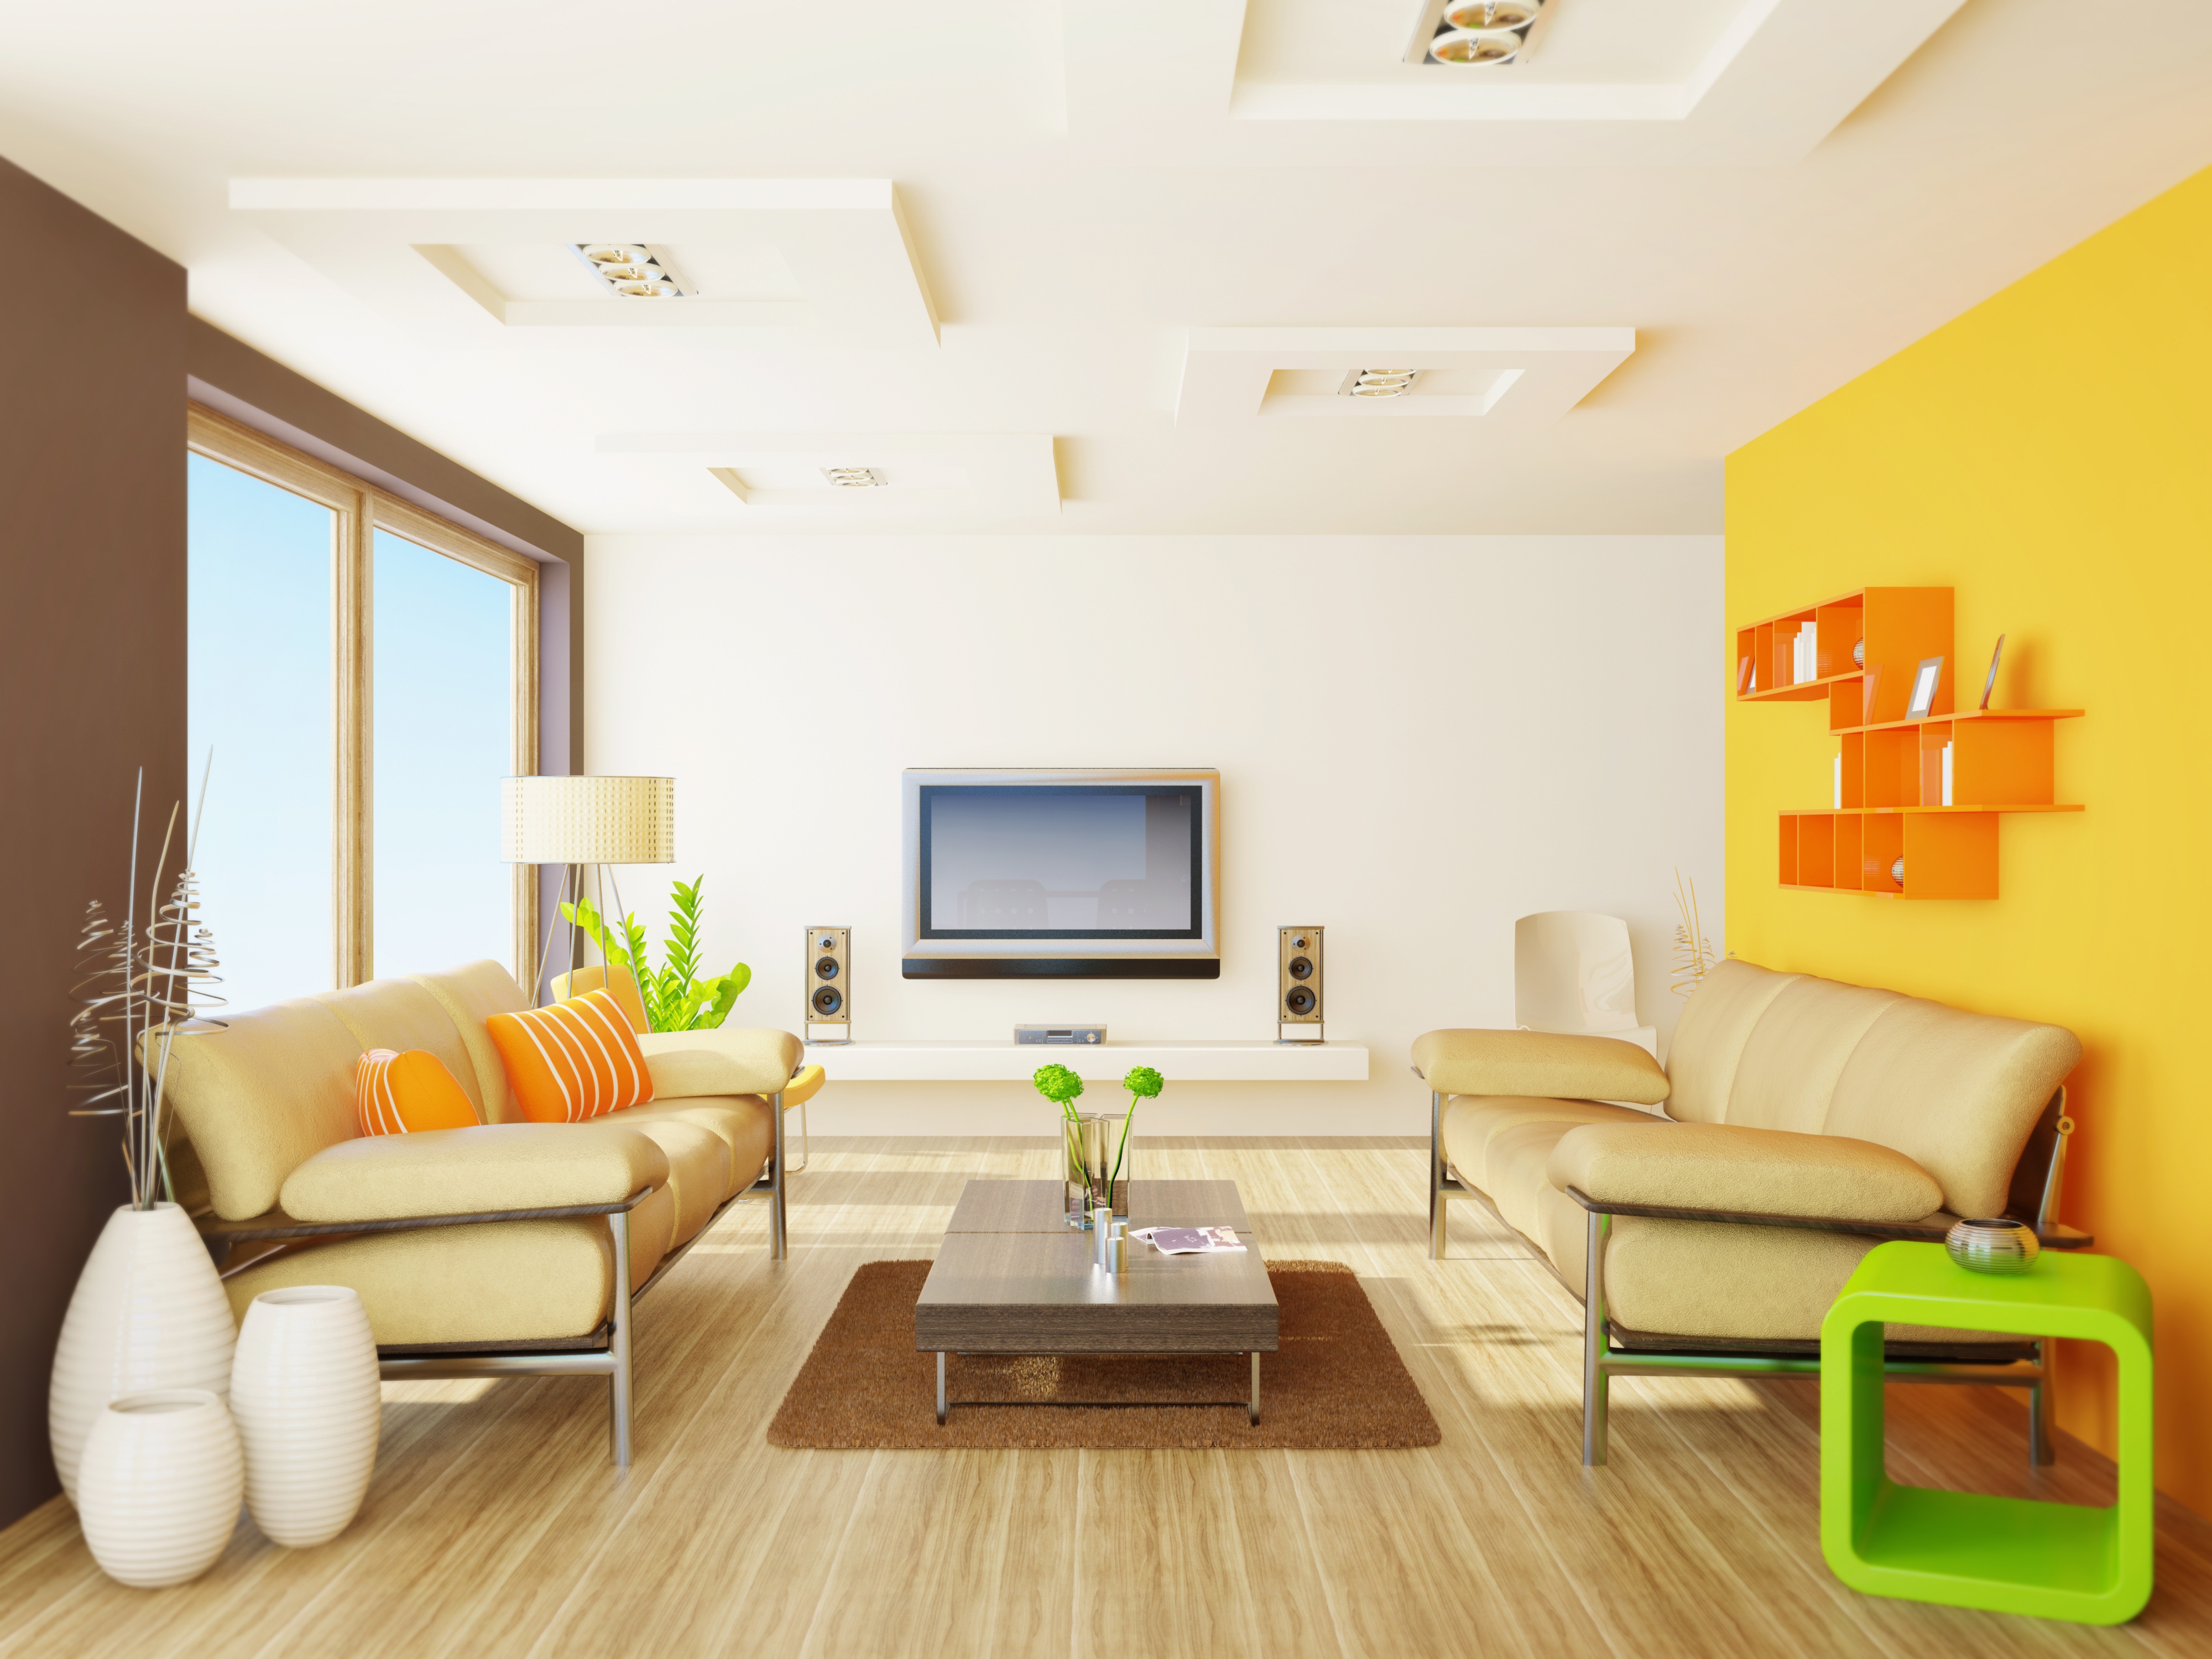 General 4000x3000 living rooms room colorful interior digital art